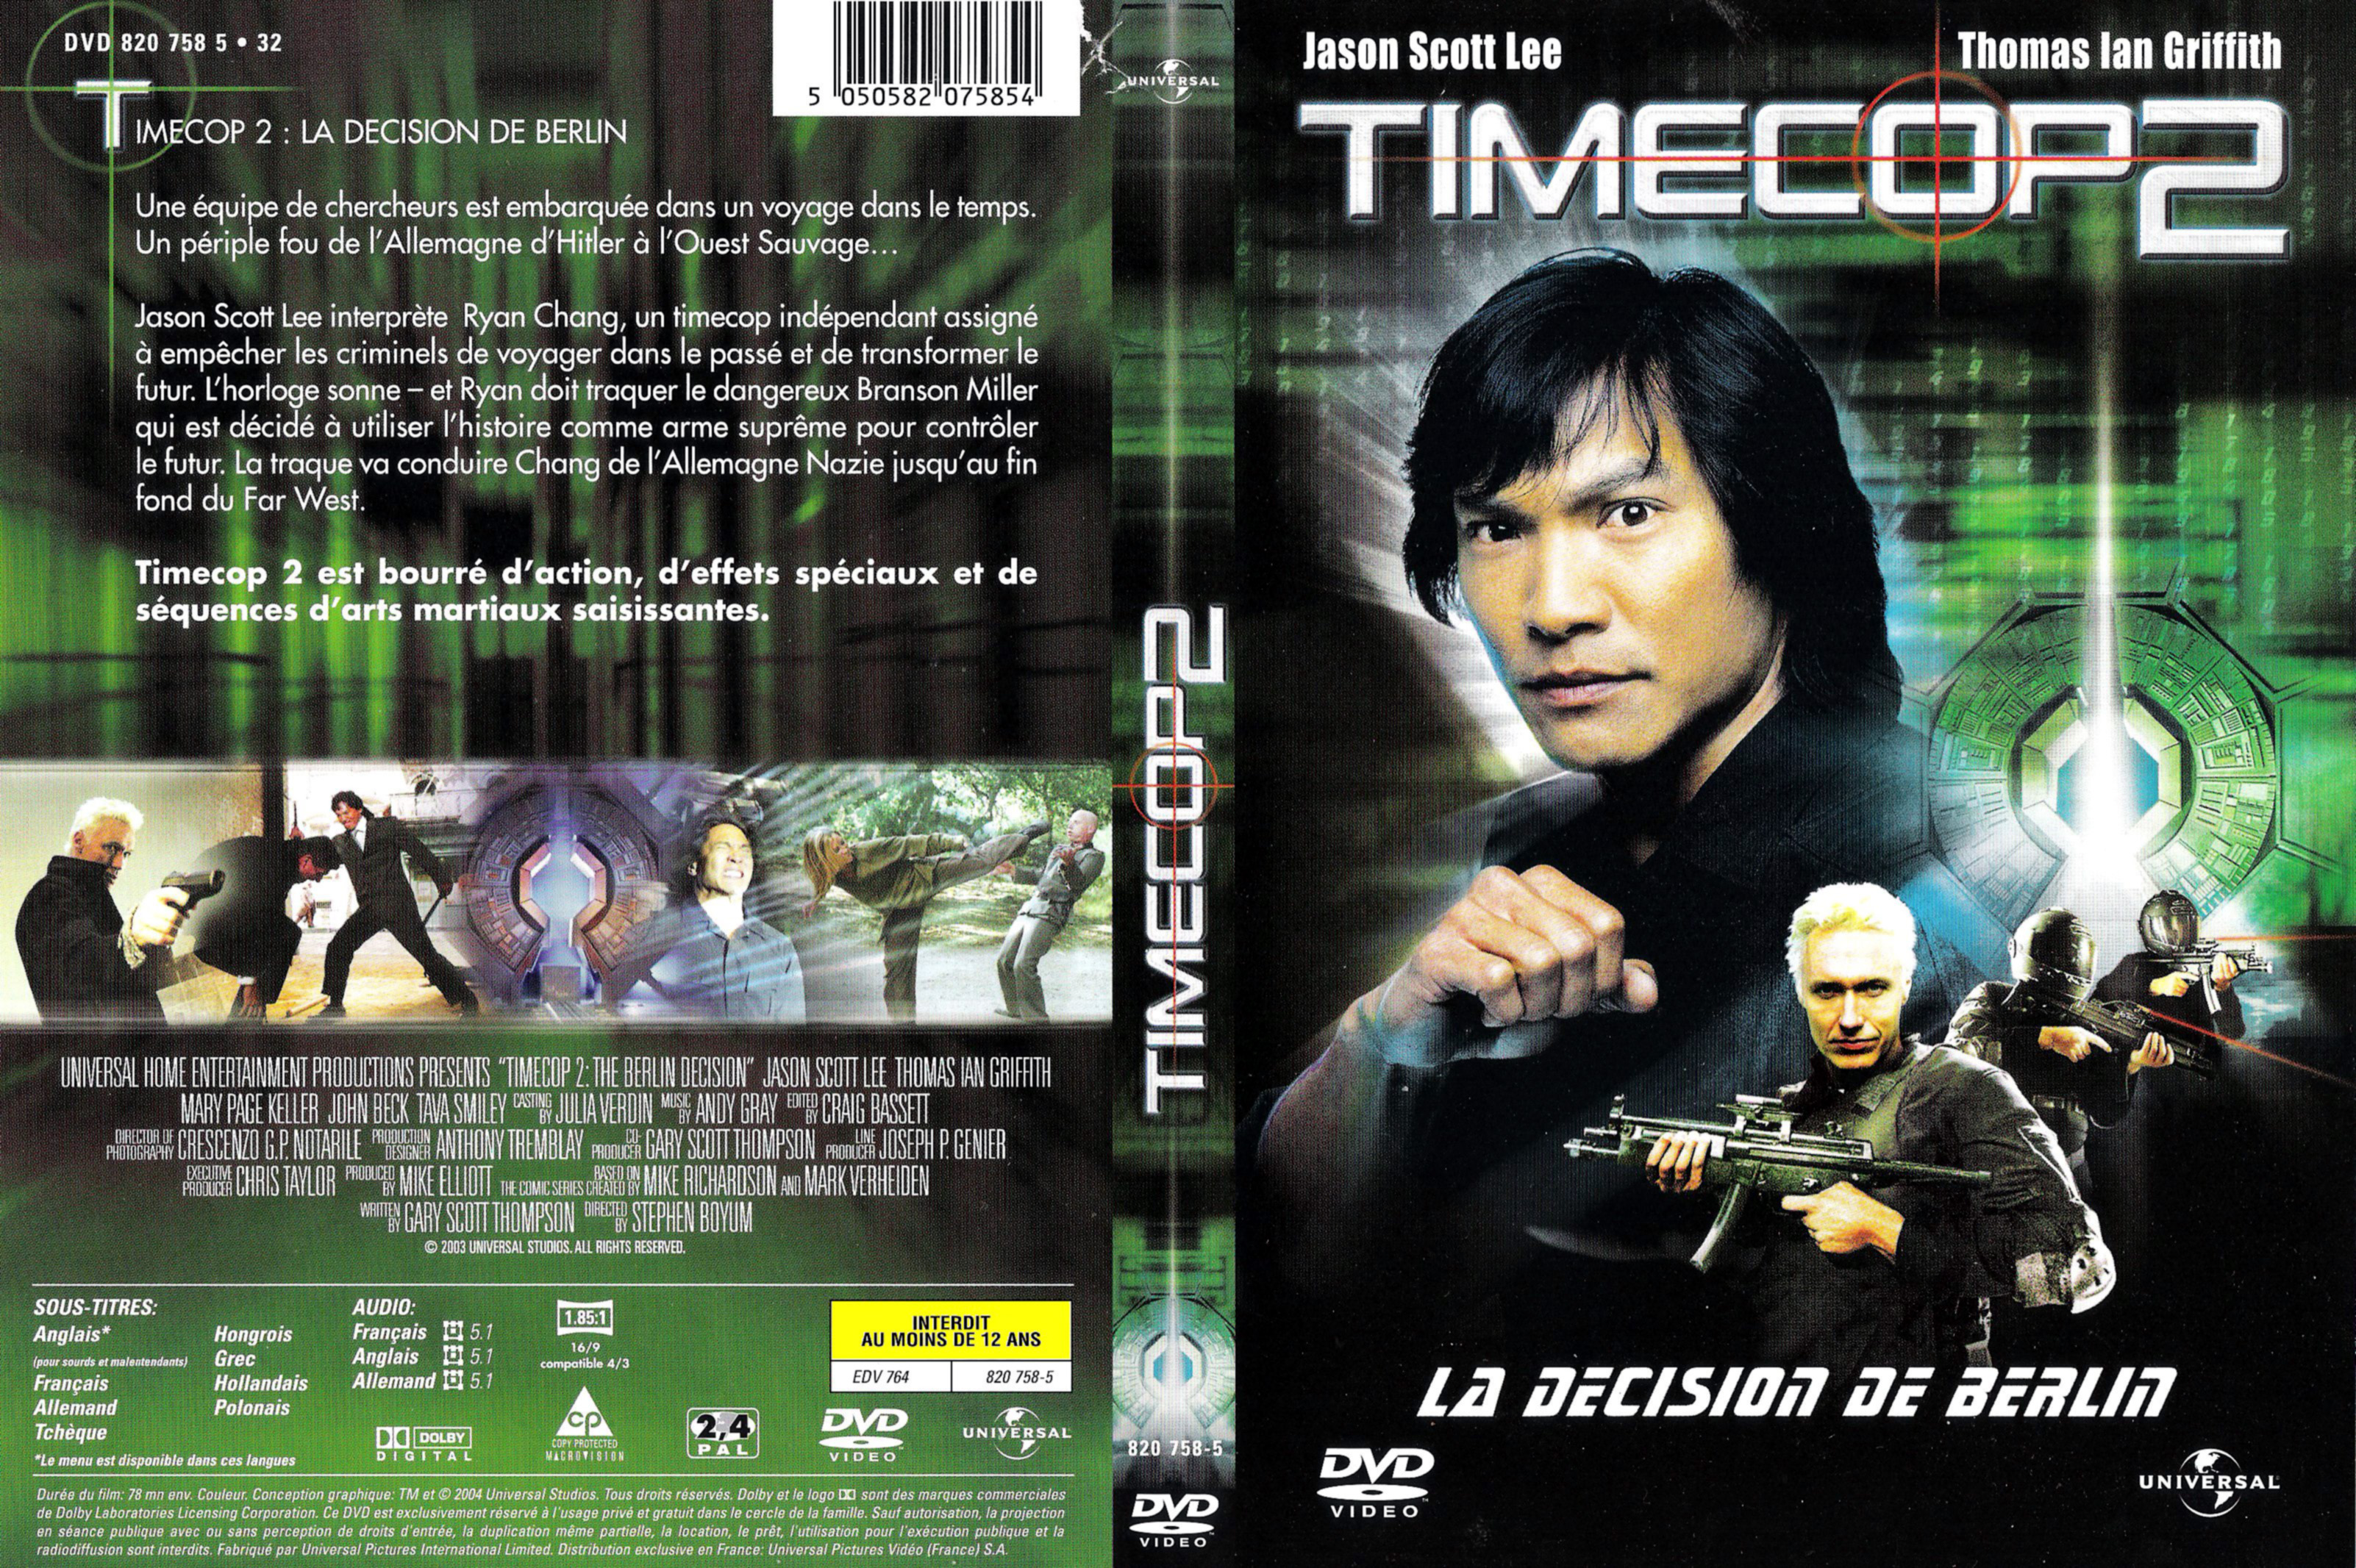 Jaquette DVD Timecop 2 v2